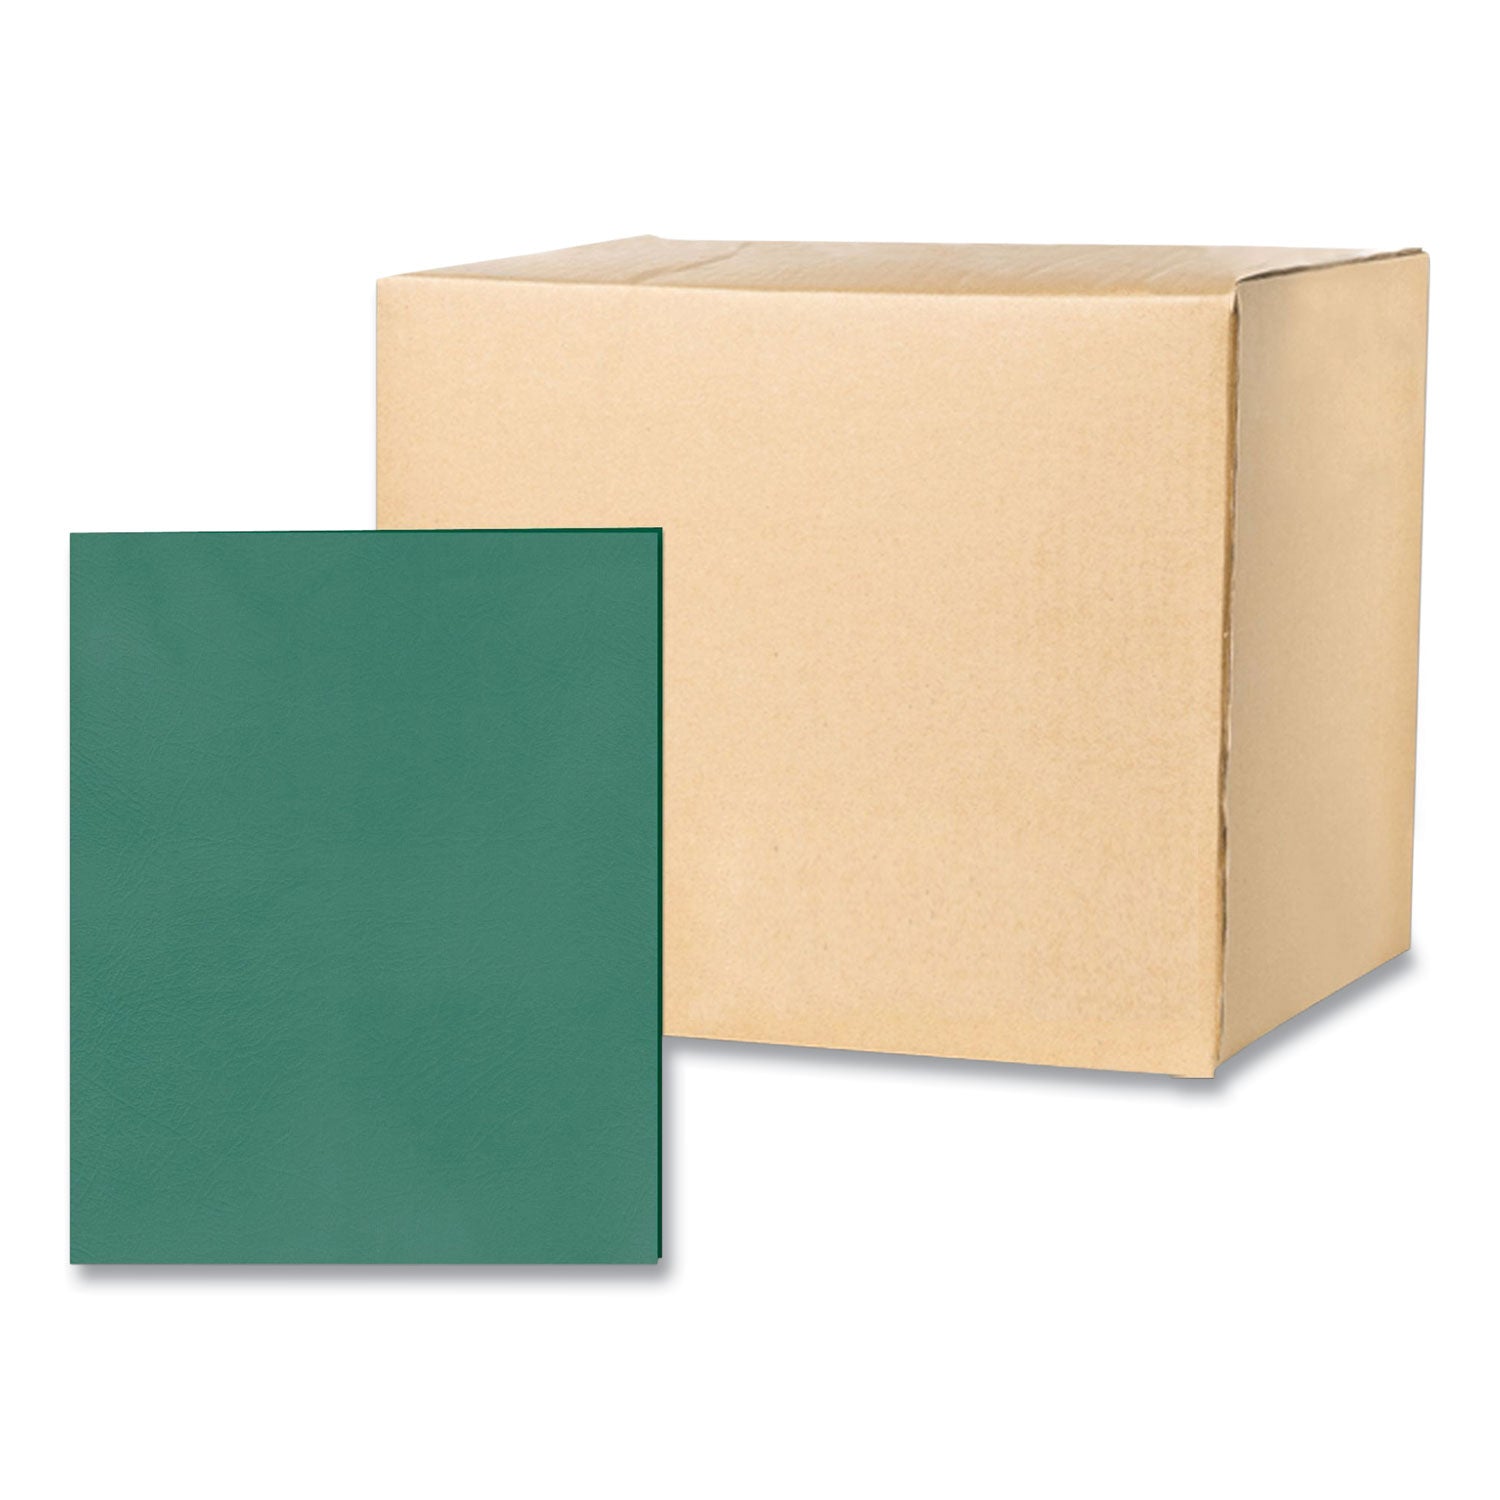 pocket-folder-05-capacity-11-x-85-green-25-box-10-boxes-carton-ships-in-4-6-business-days_roa50122cs - 1